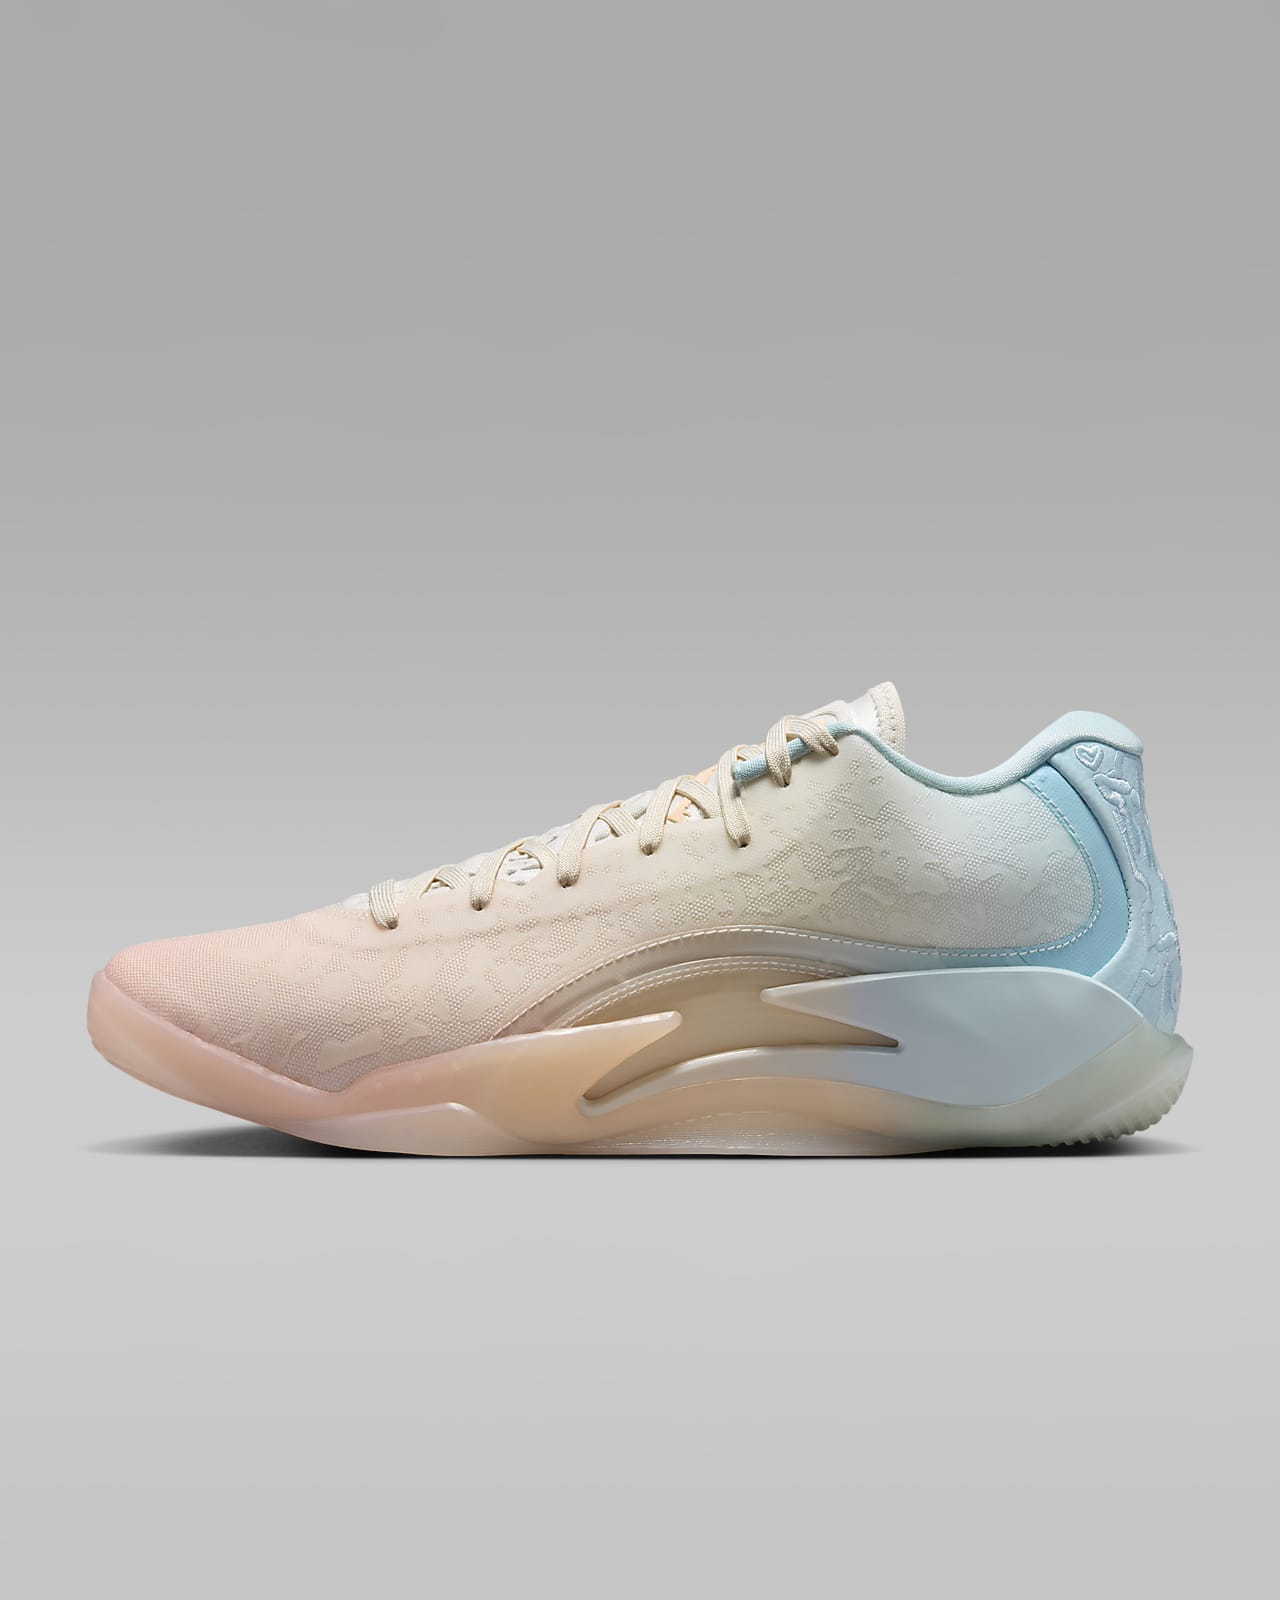 Zion 3 'Rising' PF Basketball Shoes